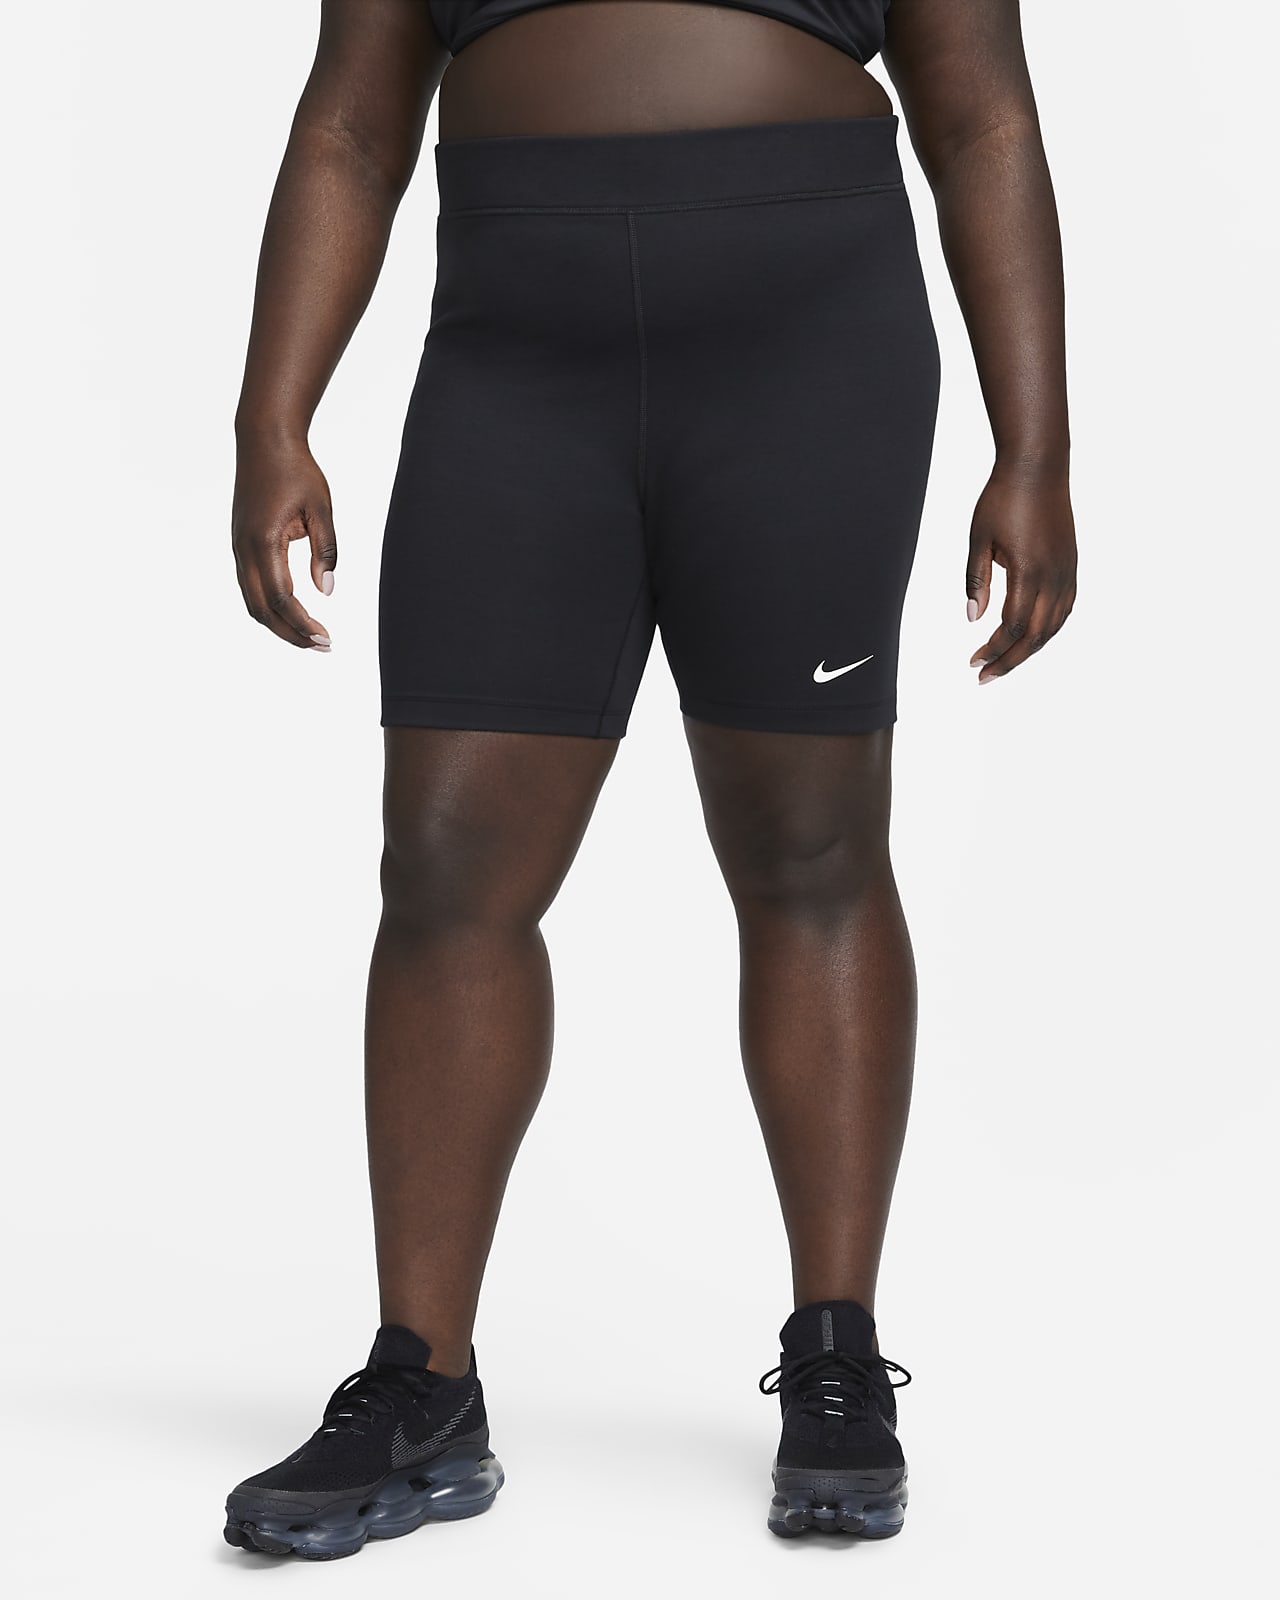 Cycliste taille haute Nike Sportswear Classics 20 cm pour femme (grande taille)